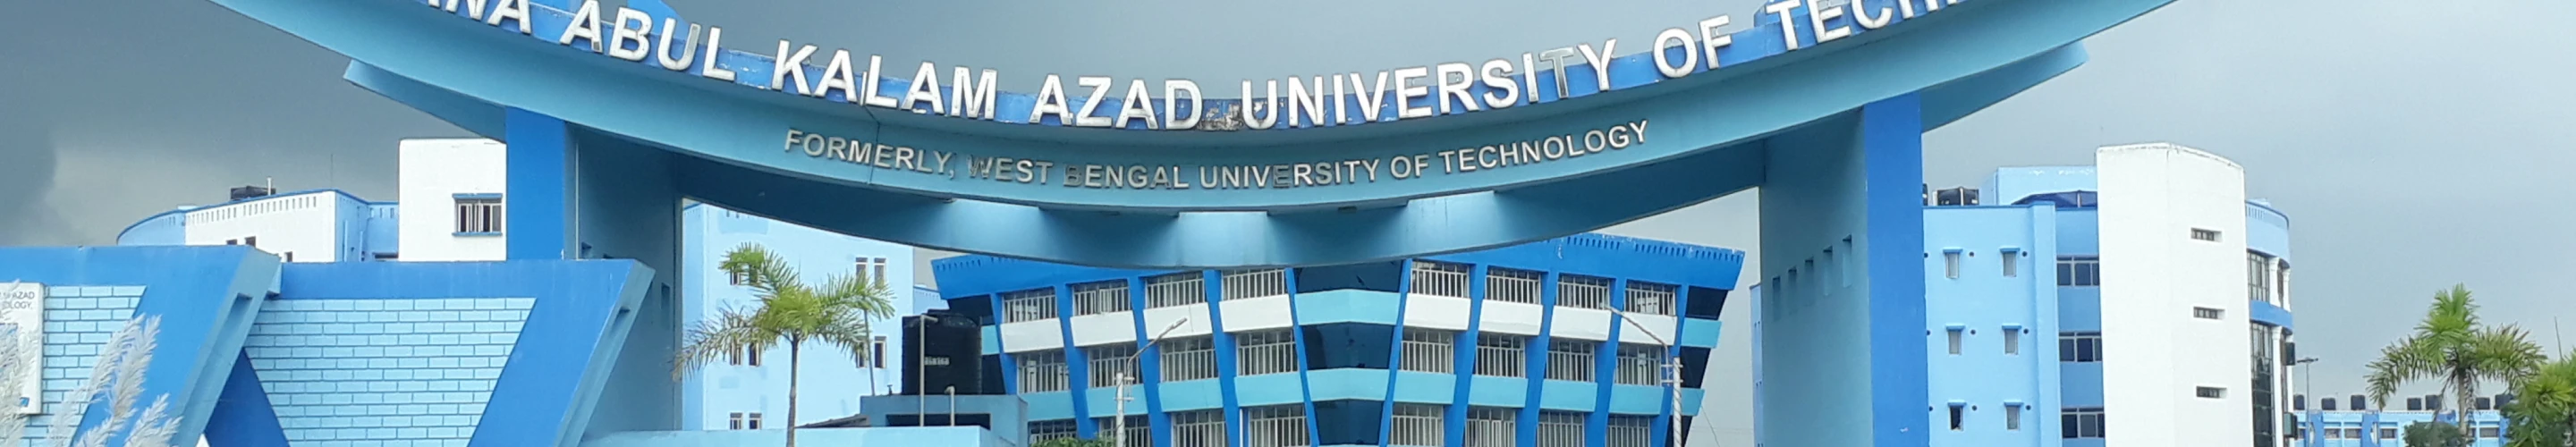 Maulana Abul Kalam Azad University of Technology, MAKAUT